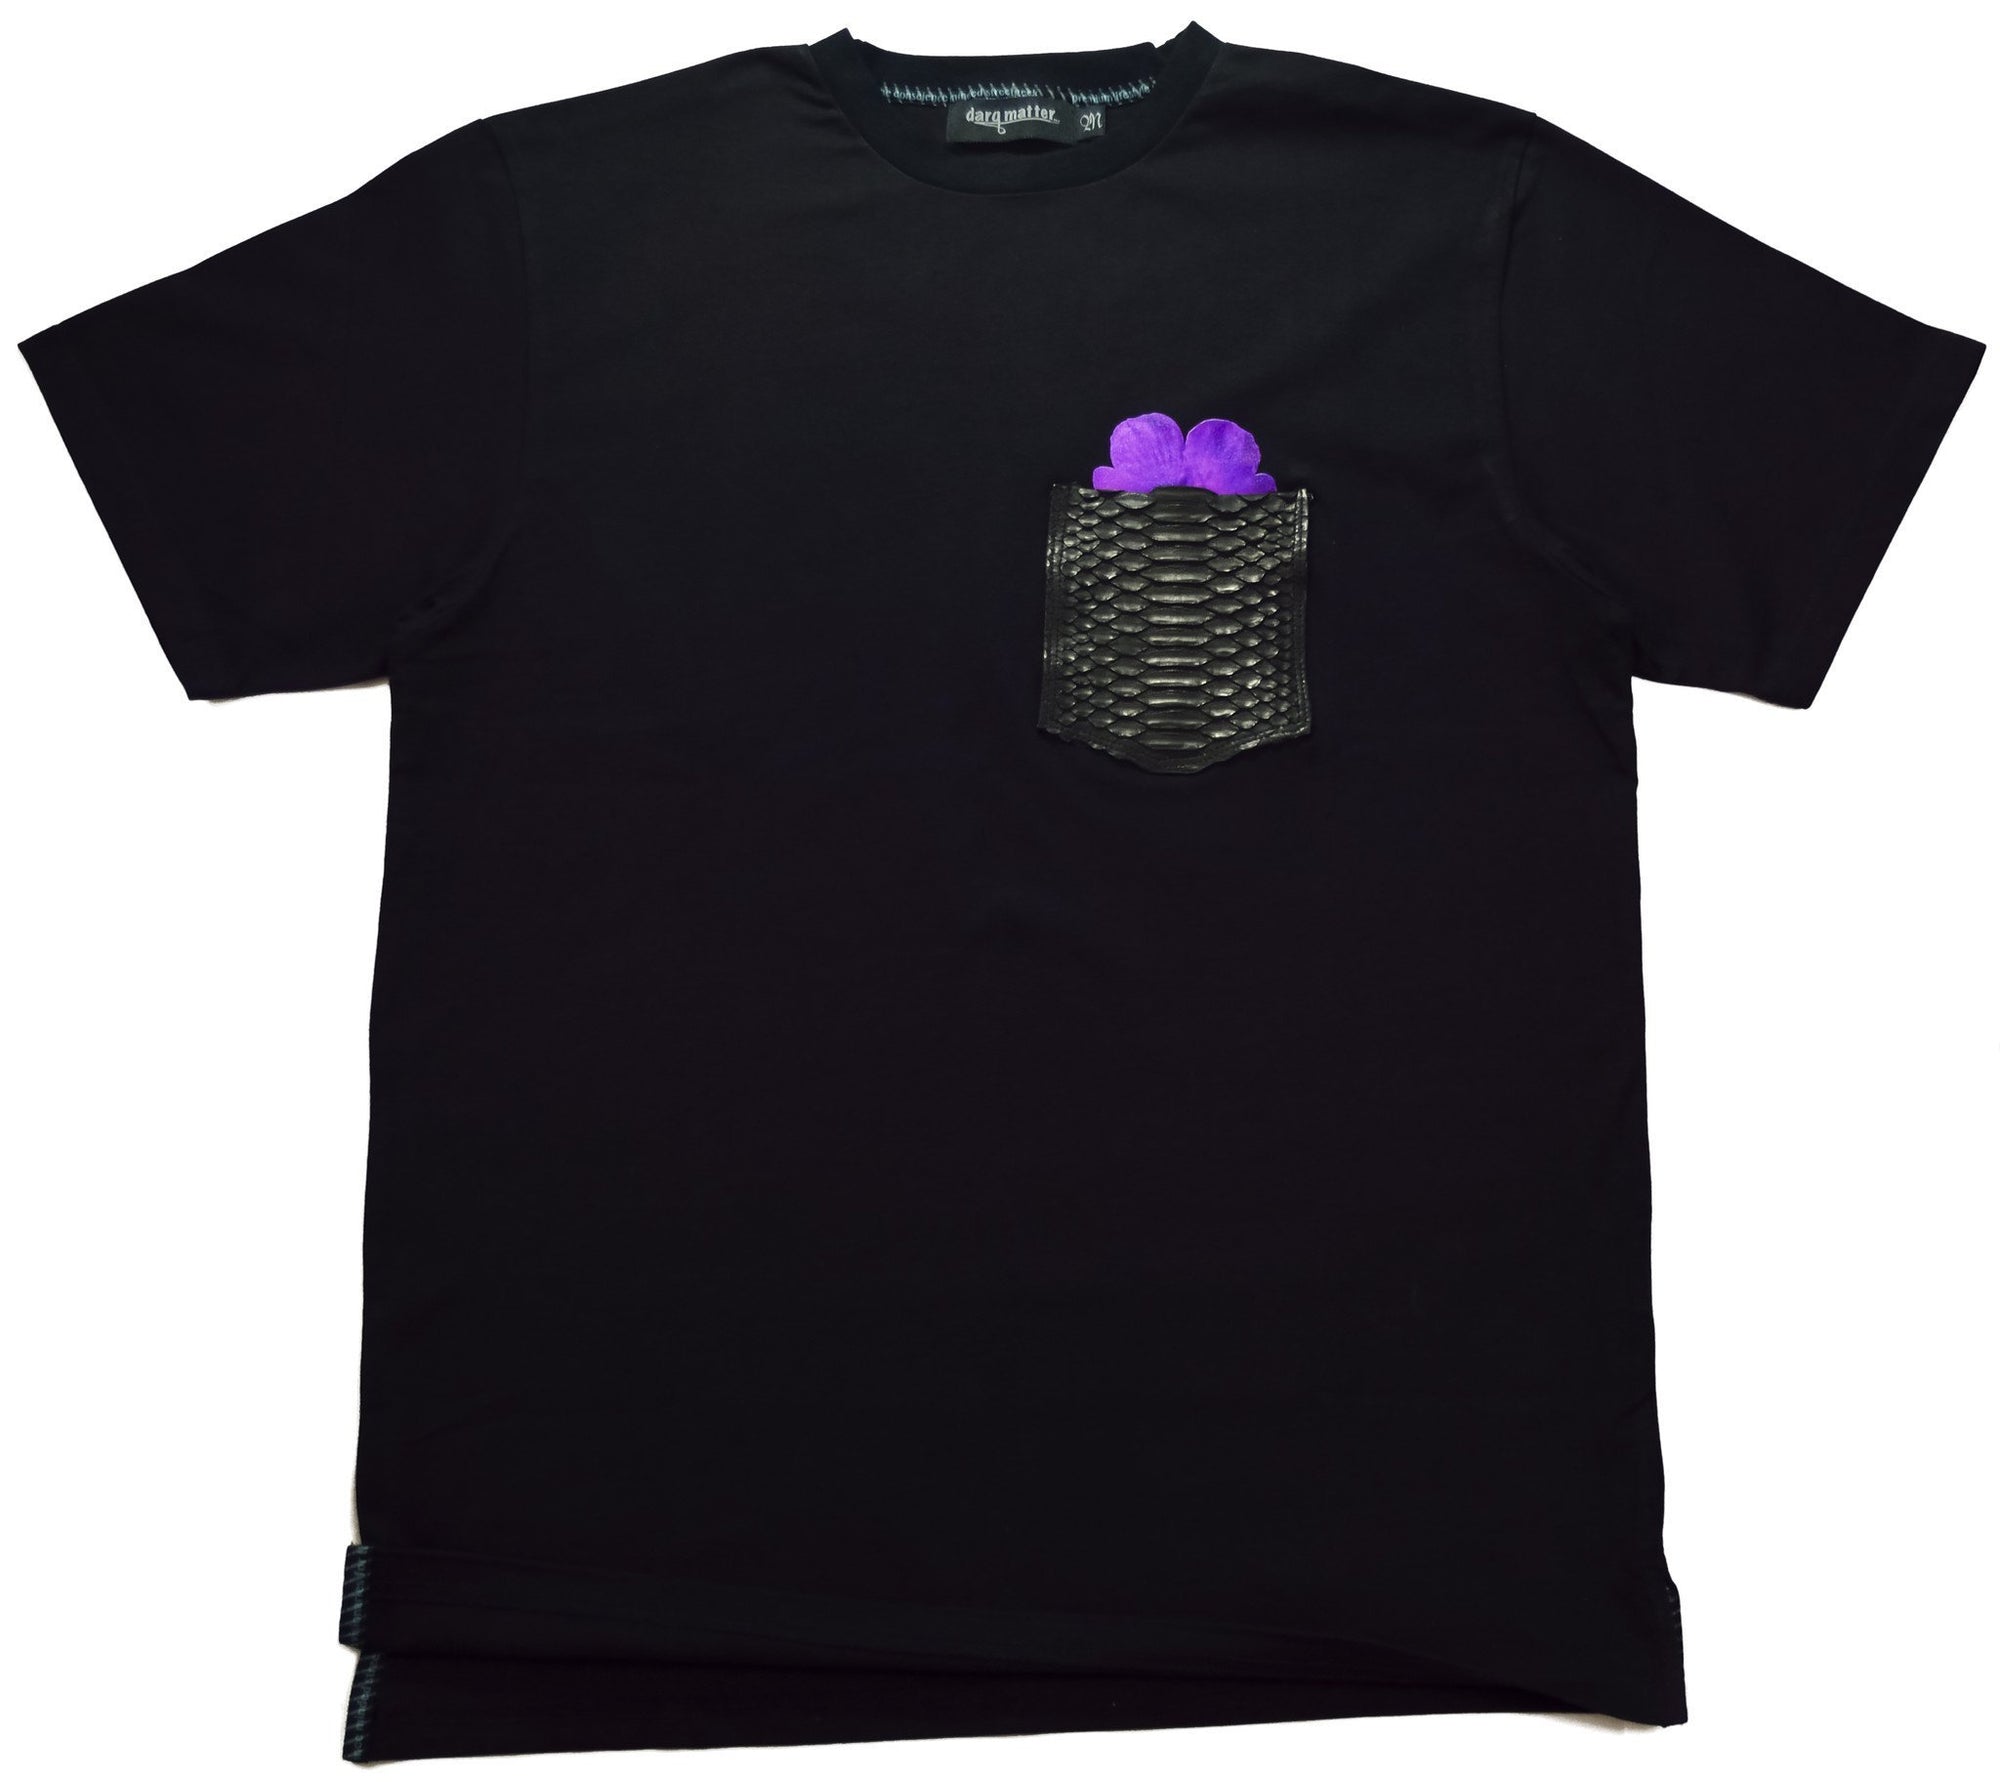 DarqMatterDesign CutnSew T-Shirts Viper